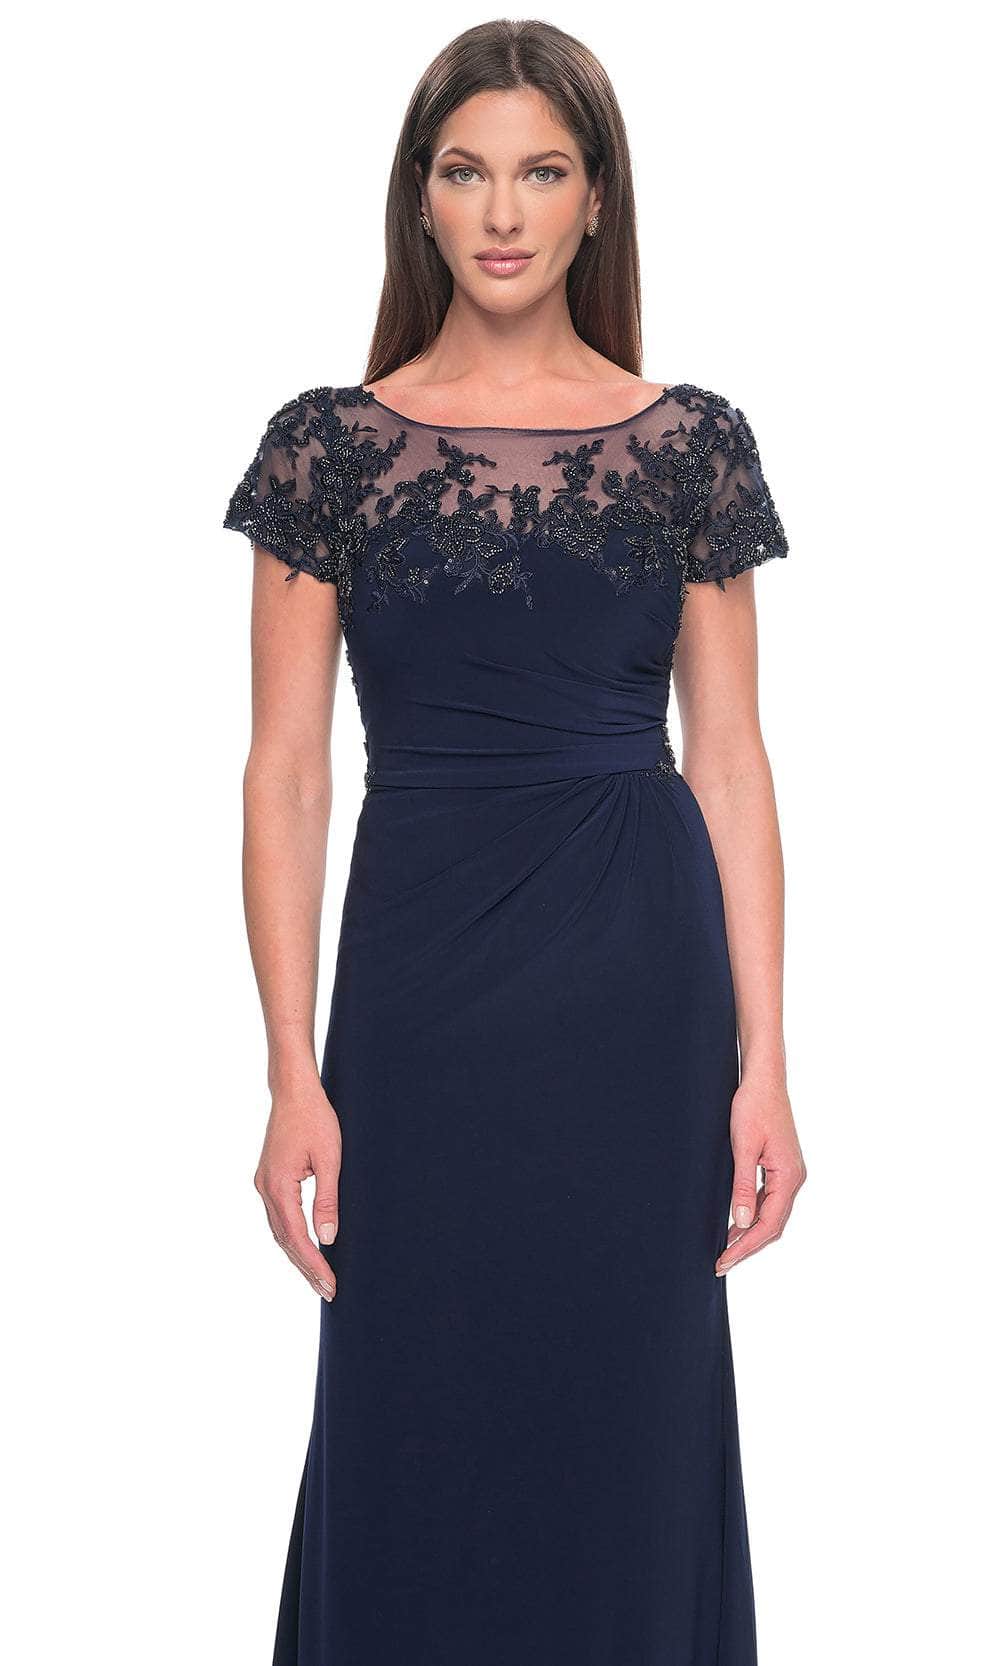 La Femme 31805 - Embroidered Ruched Detailed Evening Dress Evening Dresses